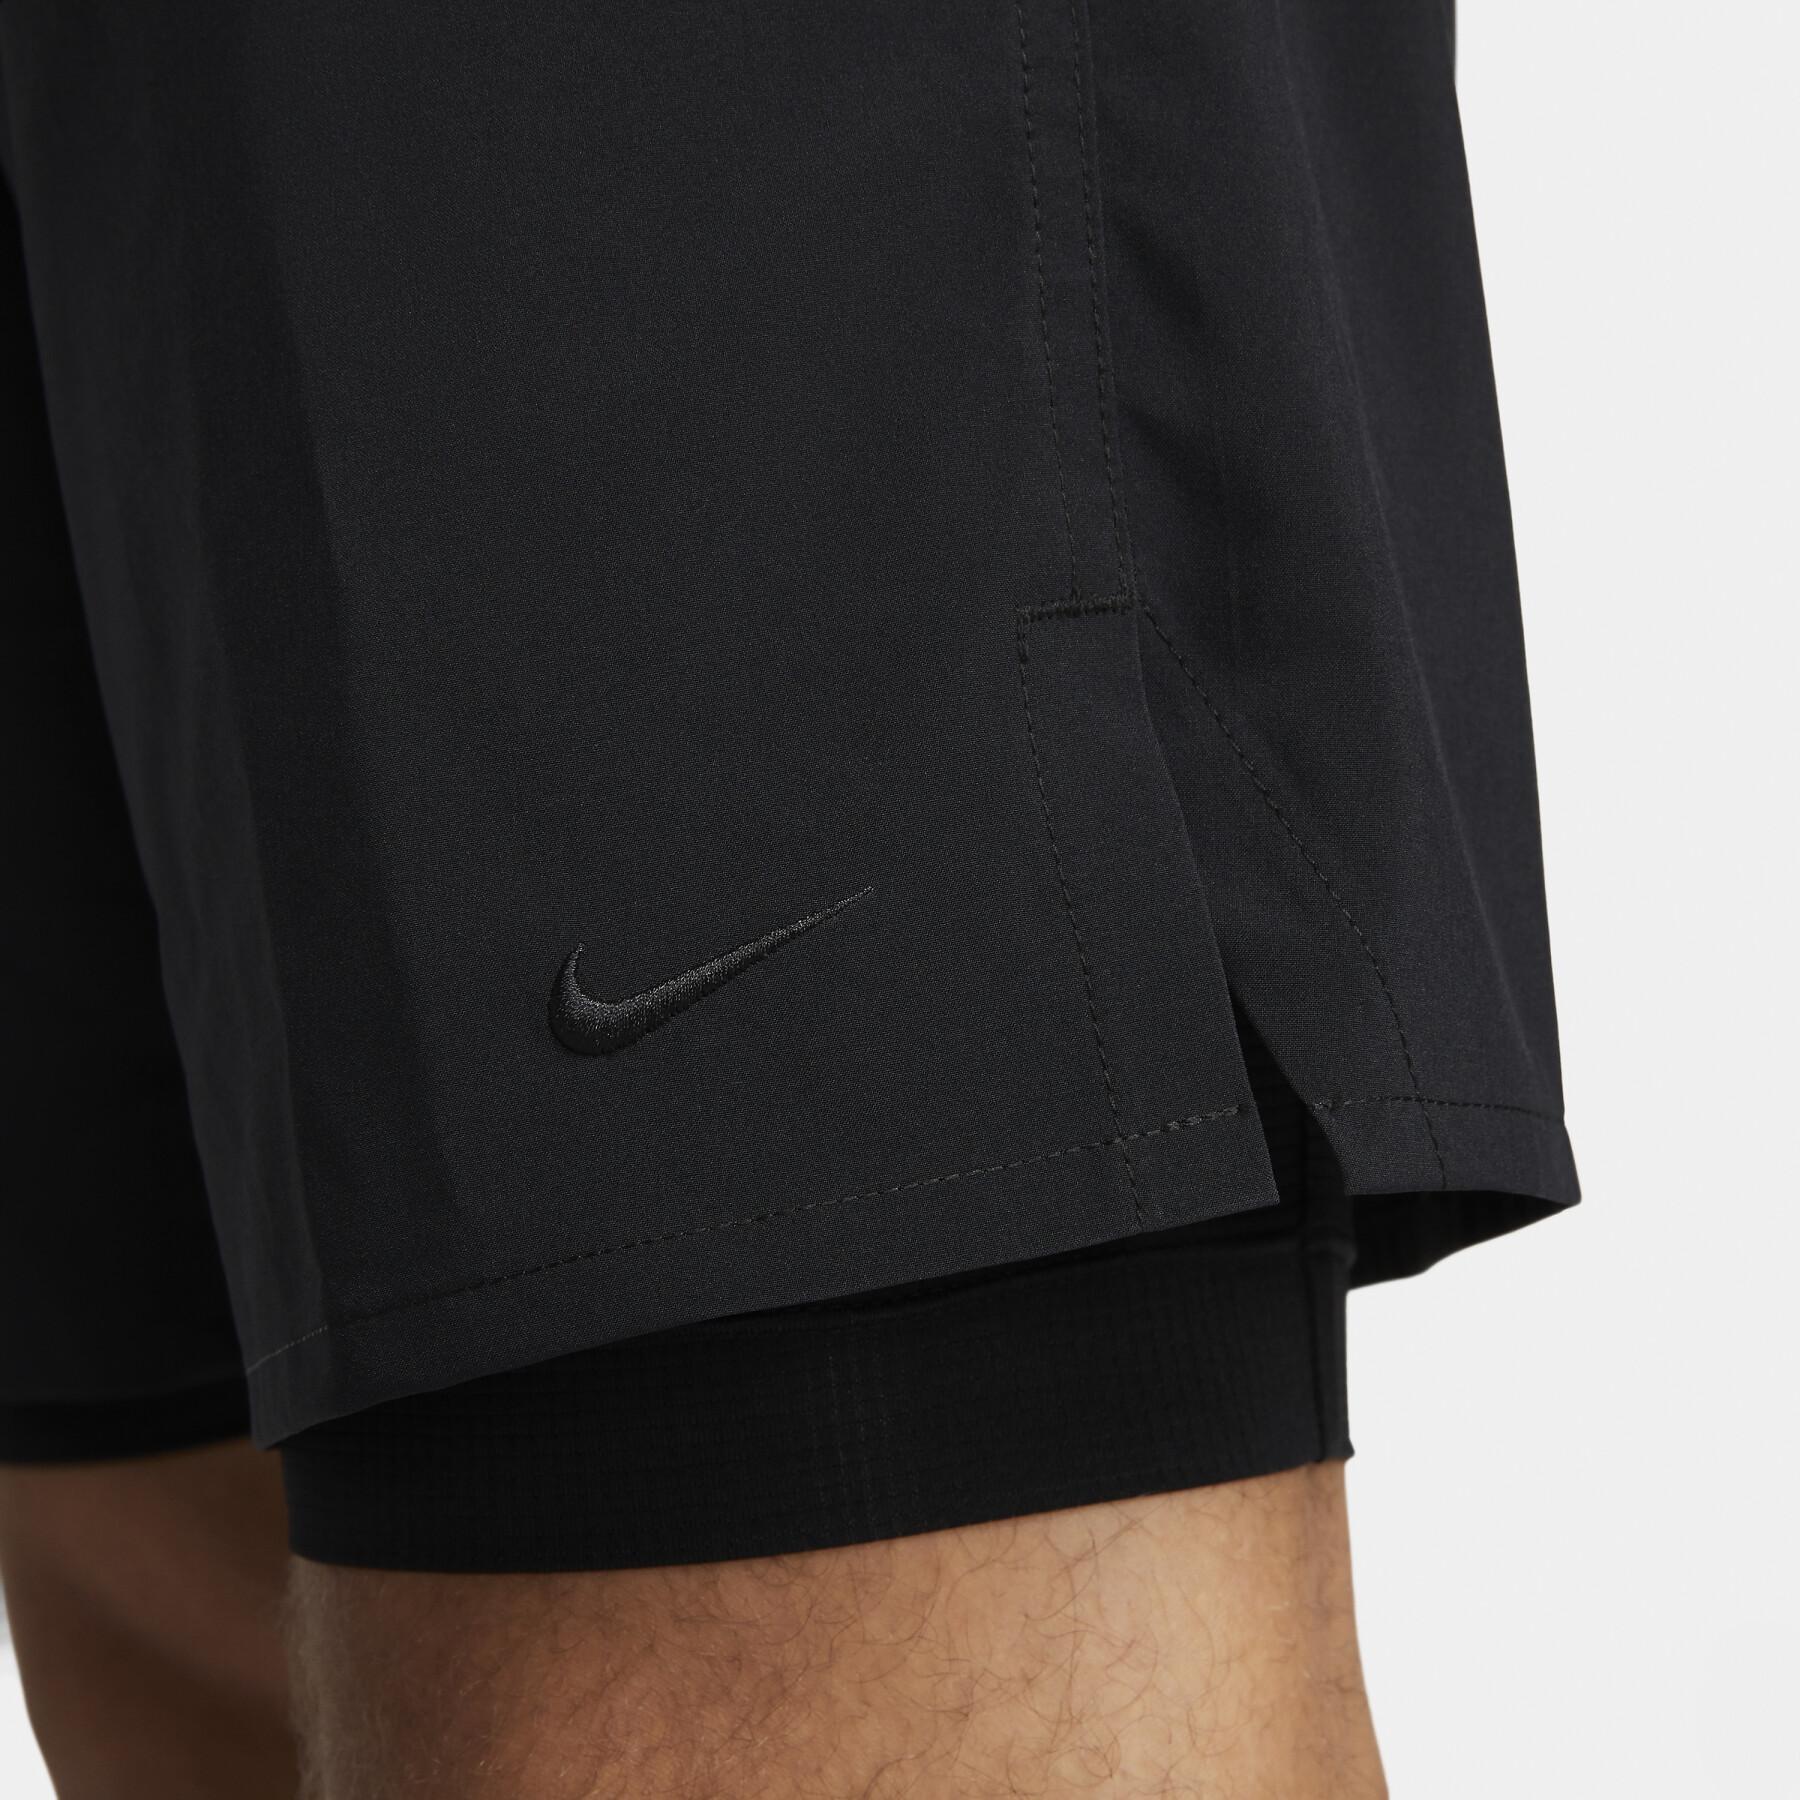 Pantalón corto tejido 2 en 1 Nike Dri-Fit Unlimited 9 "